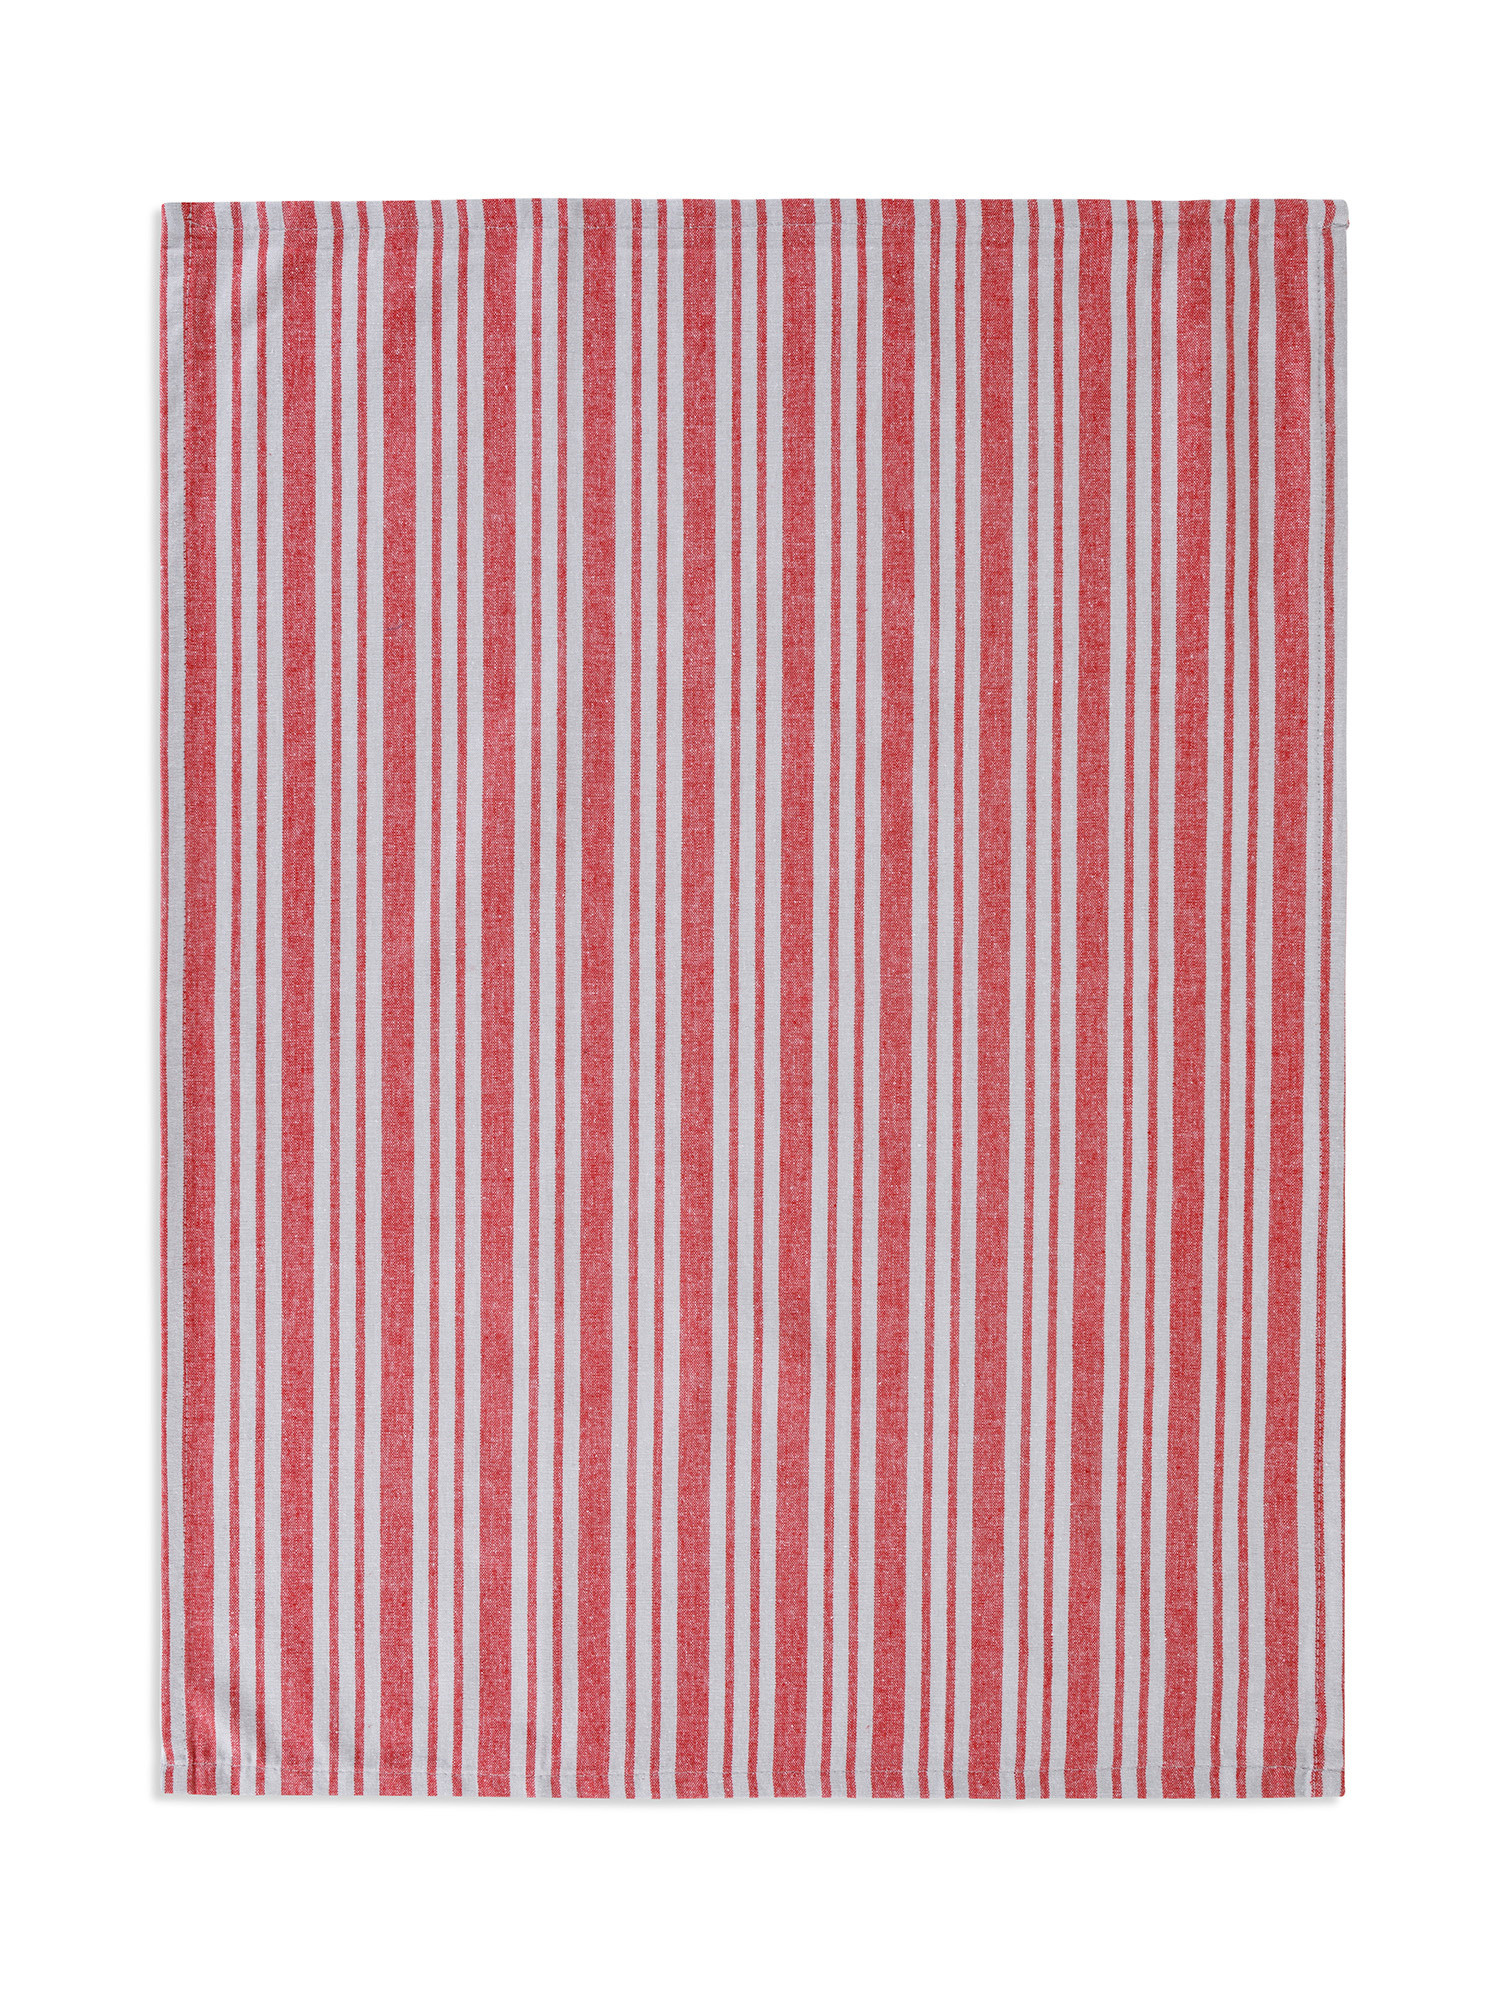 Set of 3 small flower patterned 100% cotton tea towels, Pink, large image number 2